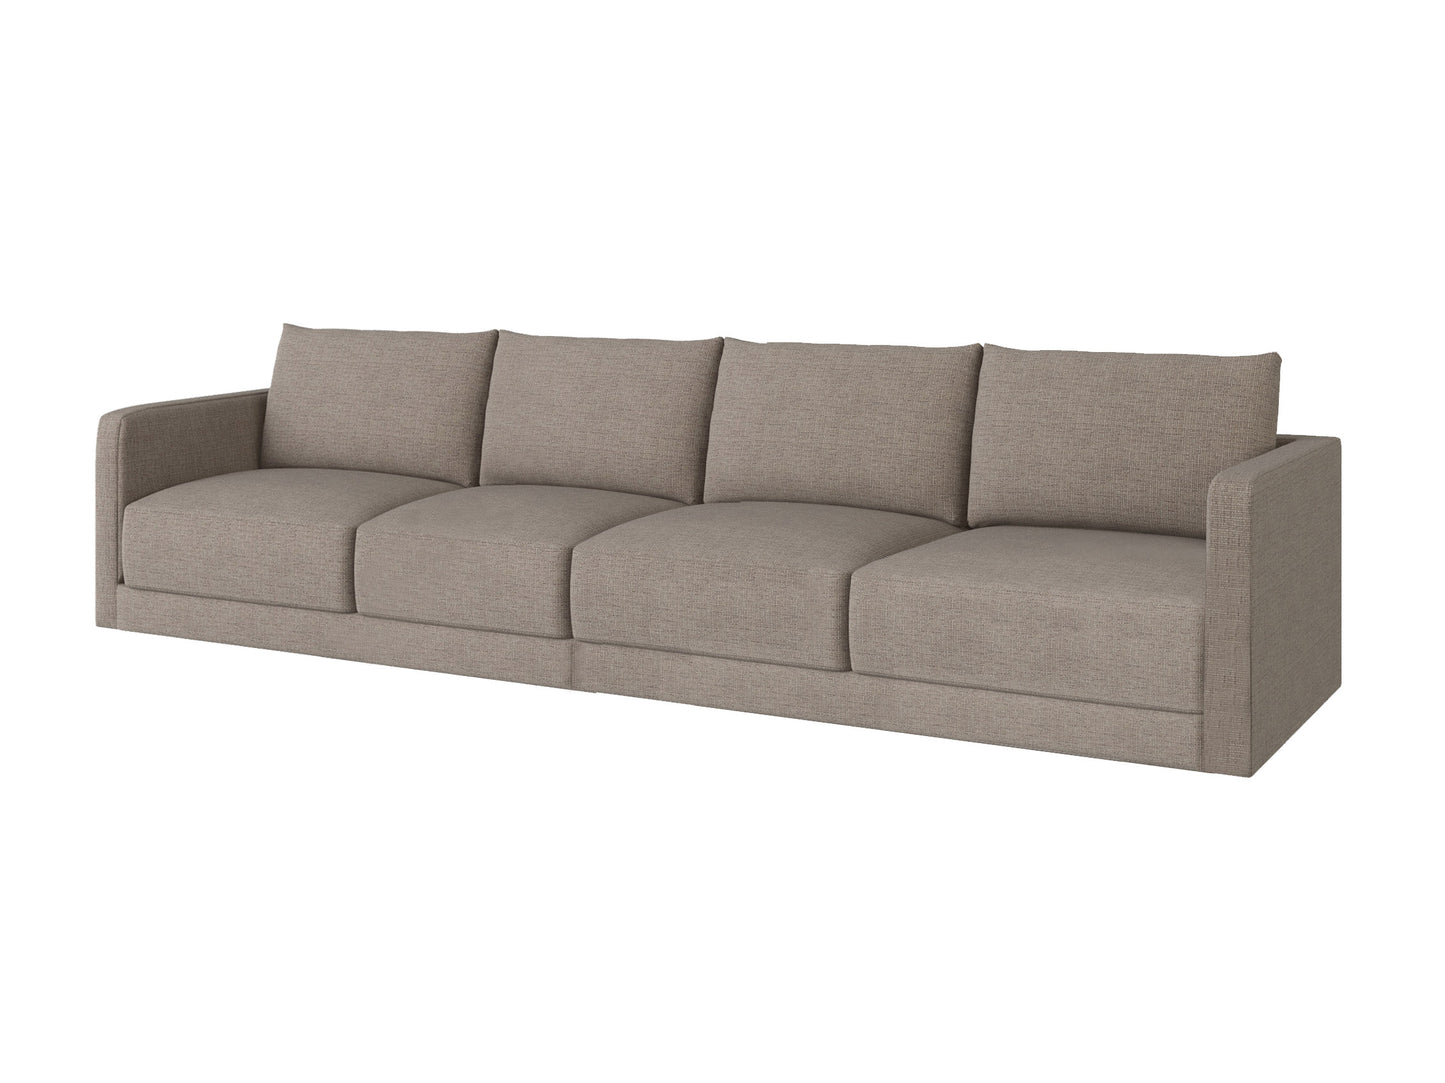 Basel 4 Seat Sofa